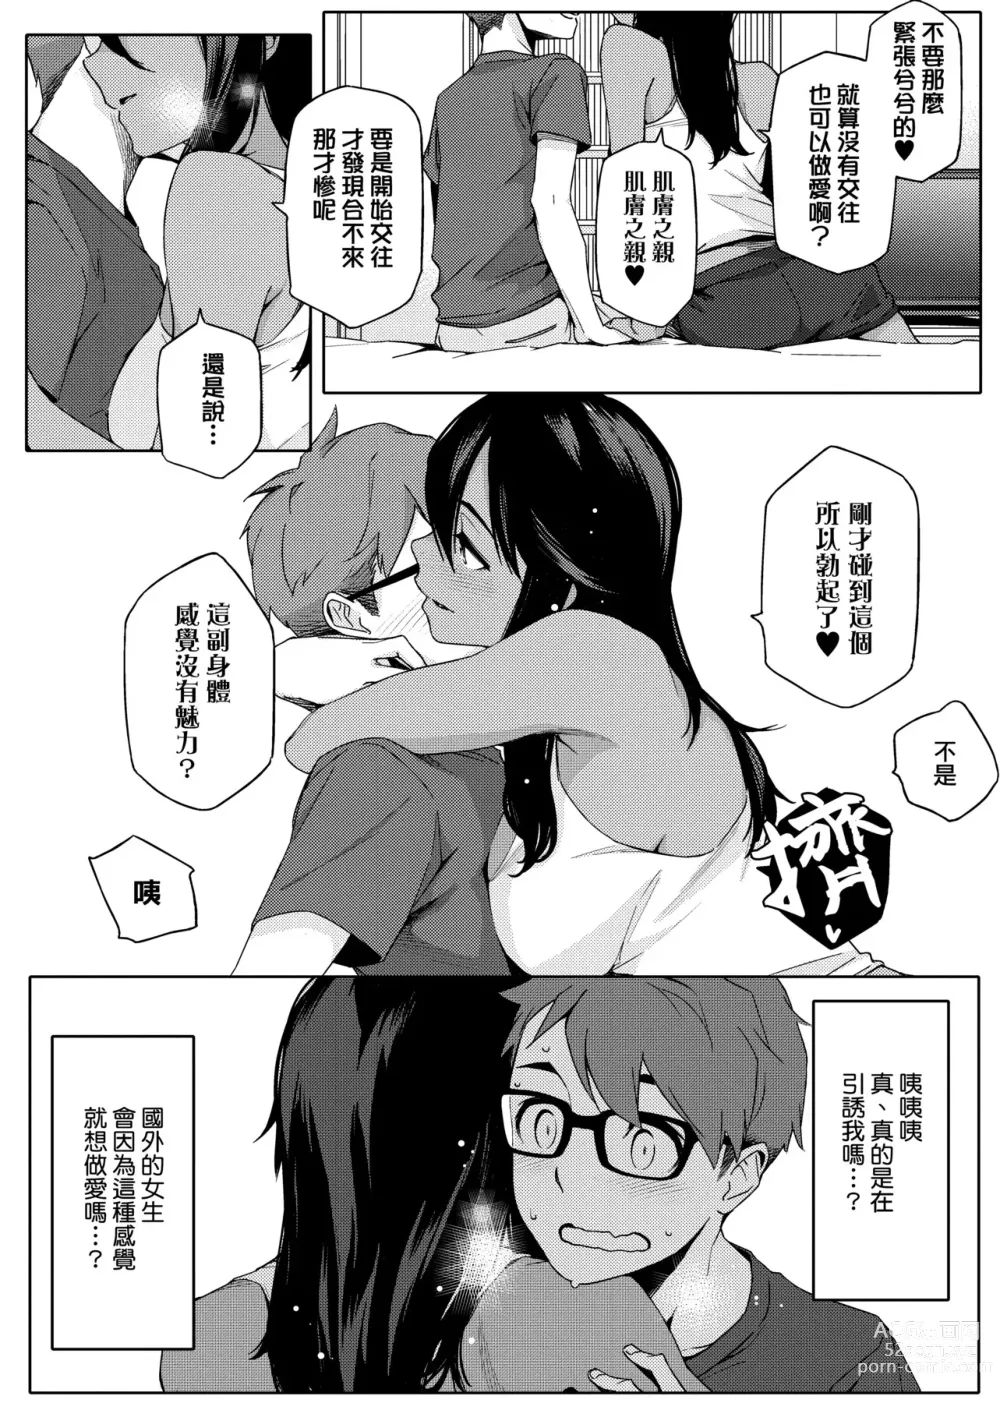 Page 23 of manga Natsu Koi Ota Girl - What Brings You to Japan?